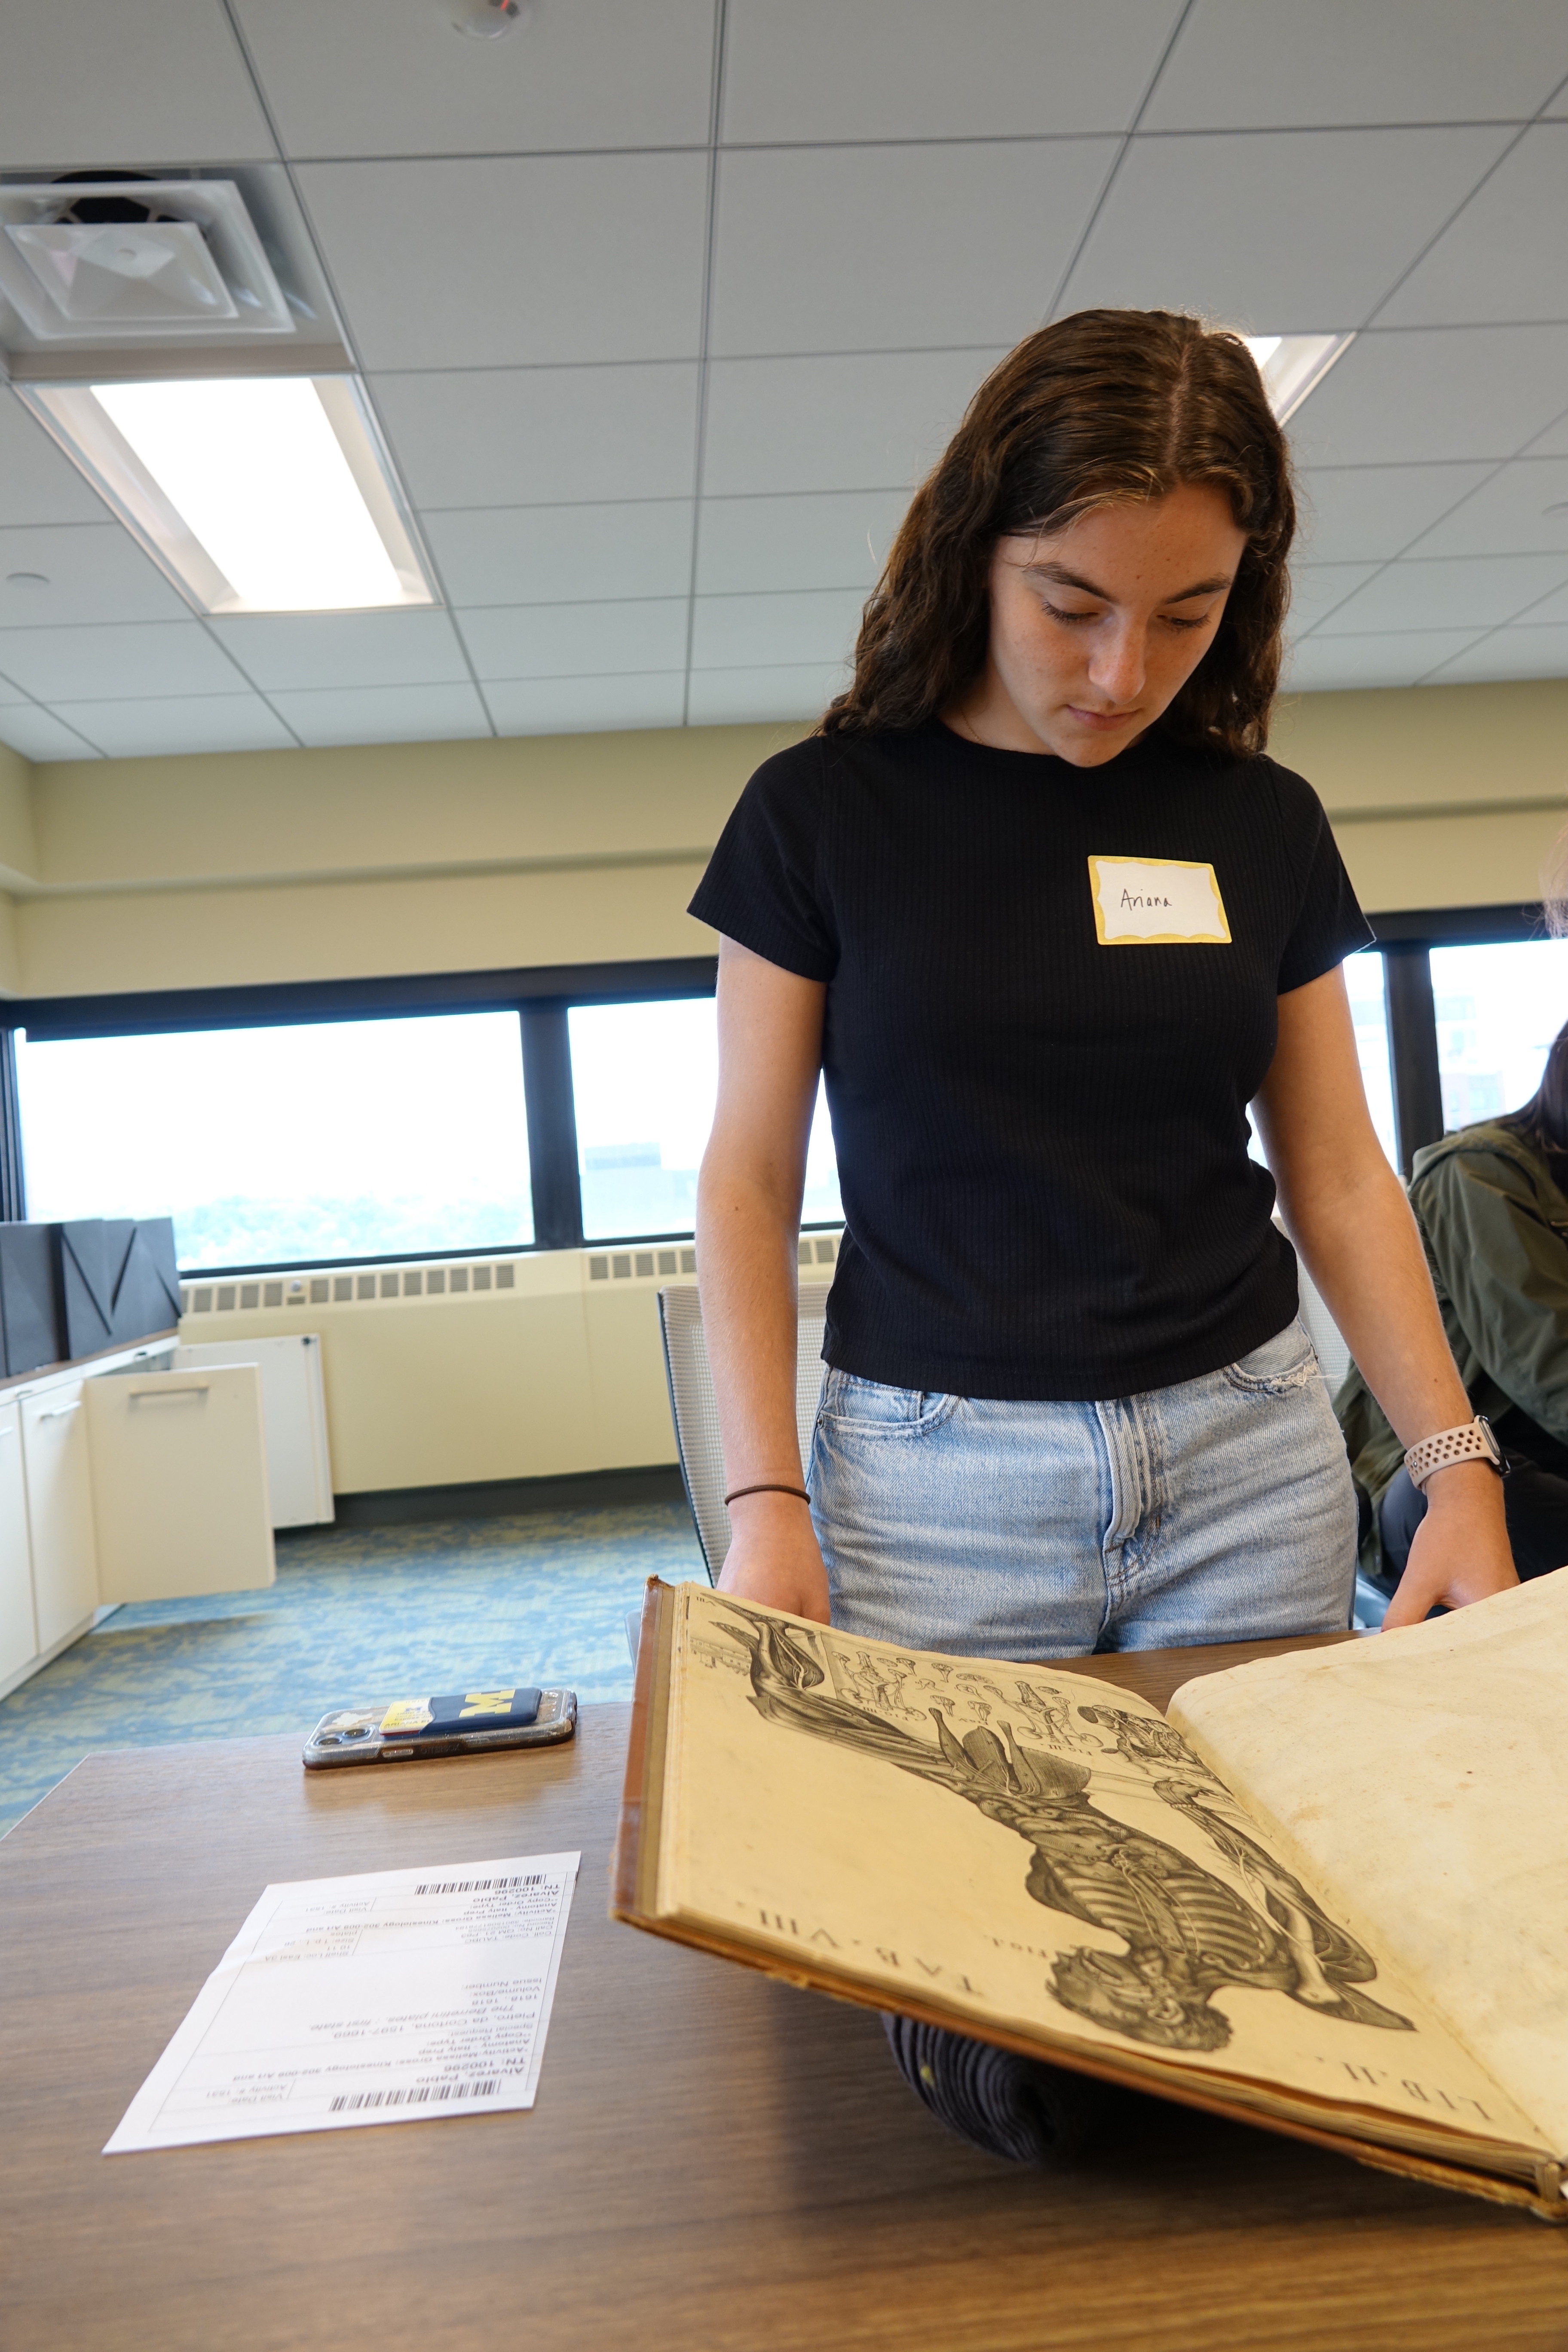 Ariana Ravitz looking at ancient anatomy books